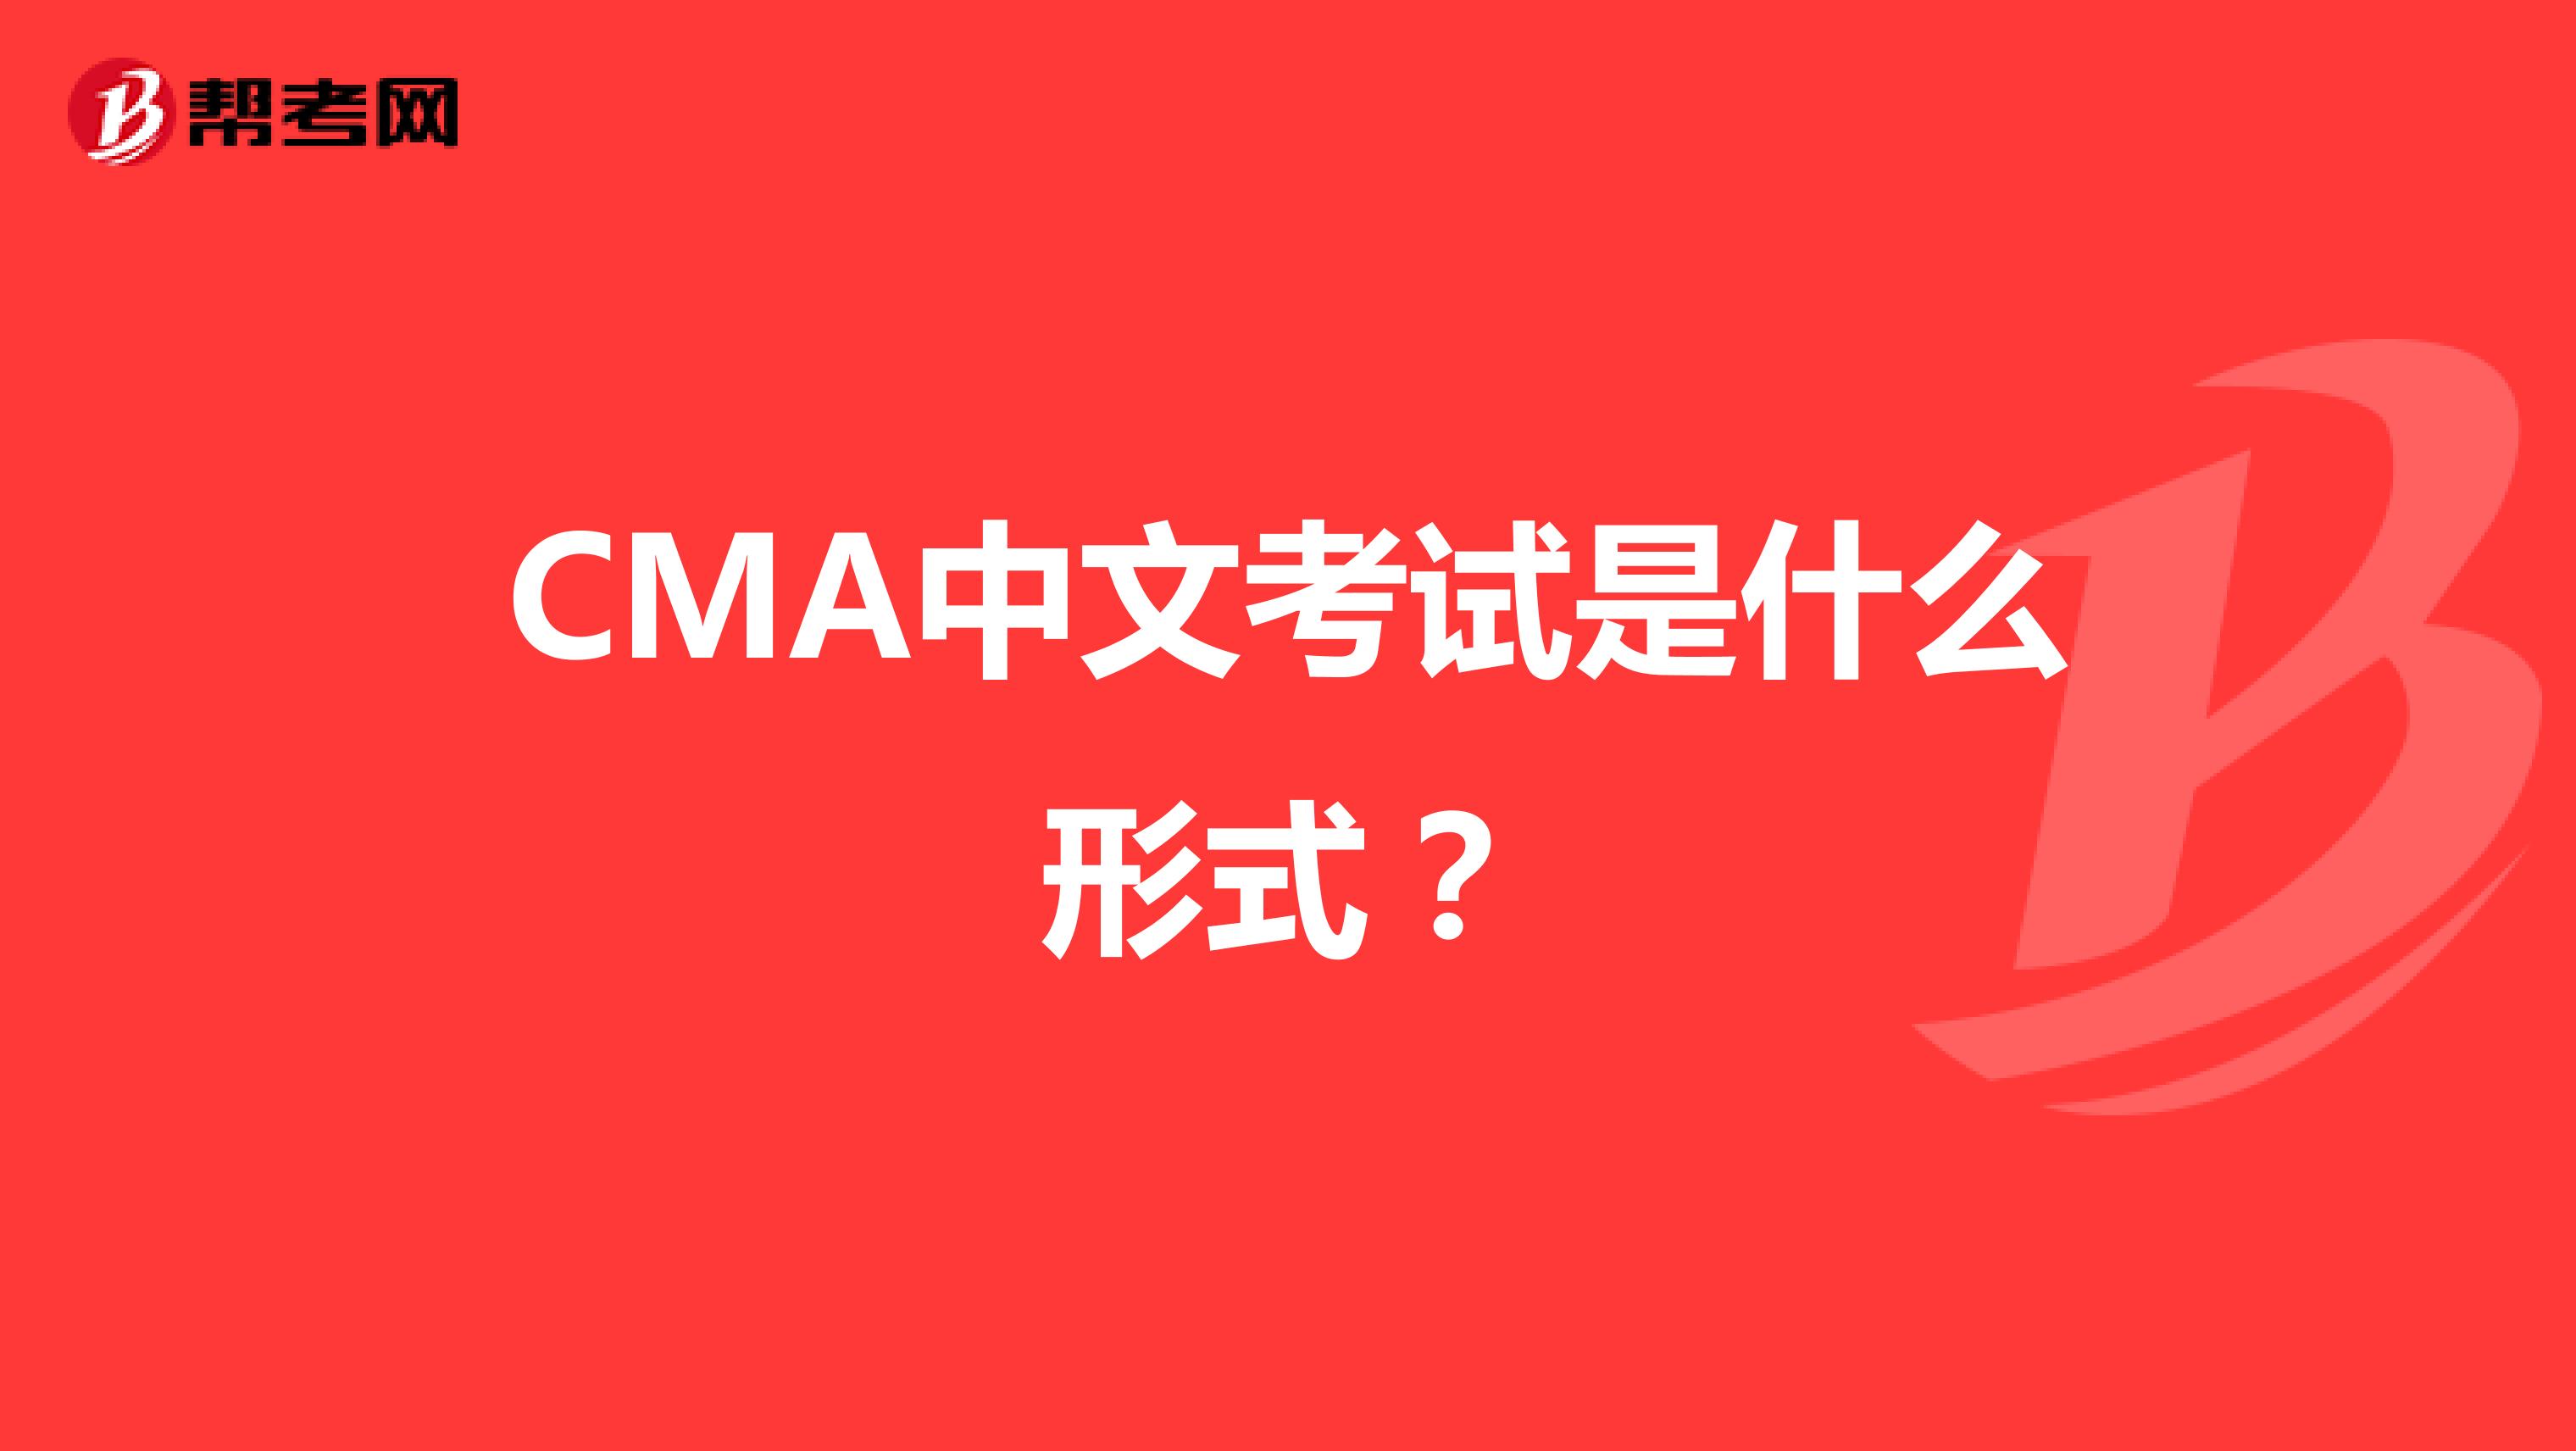 CMA中文考试是什么形式？